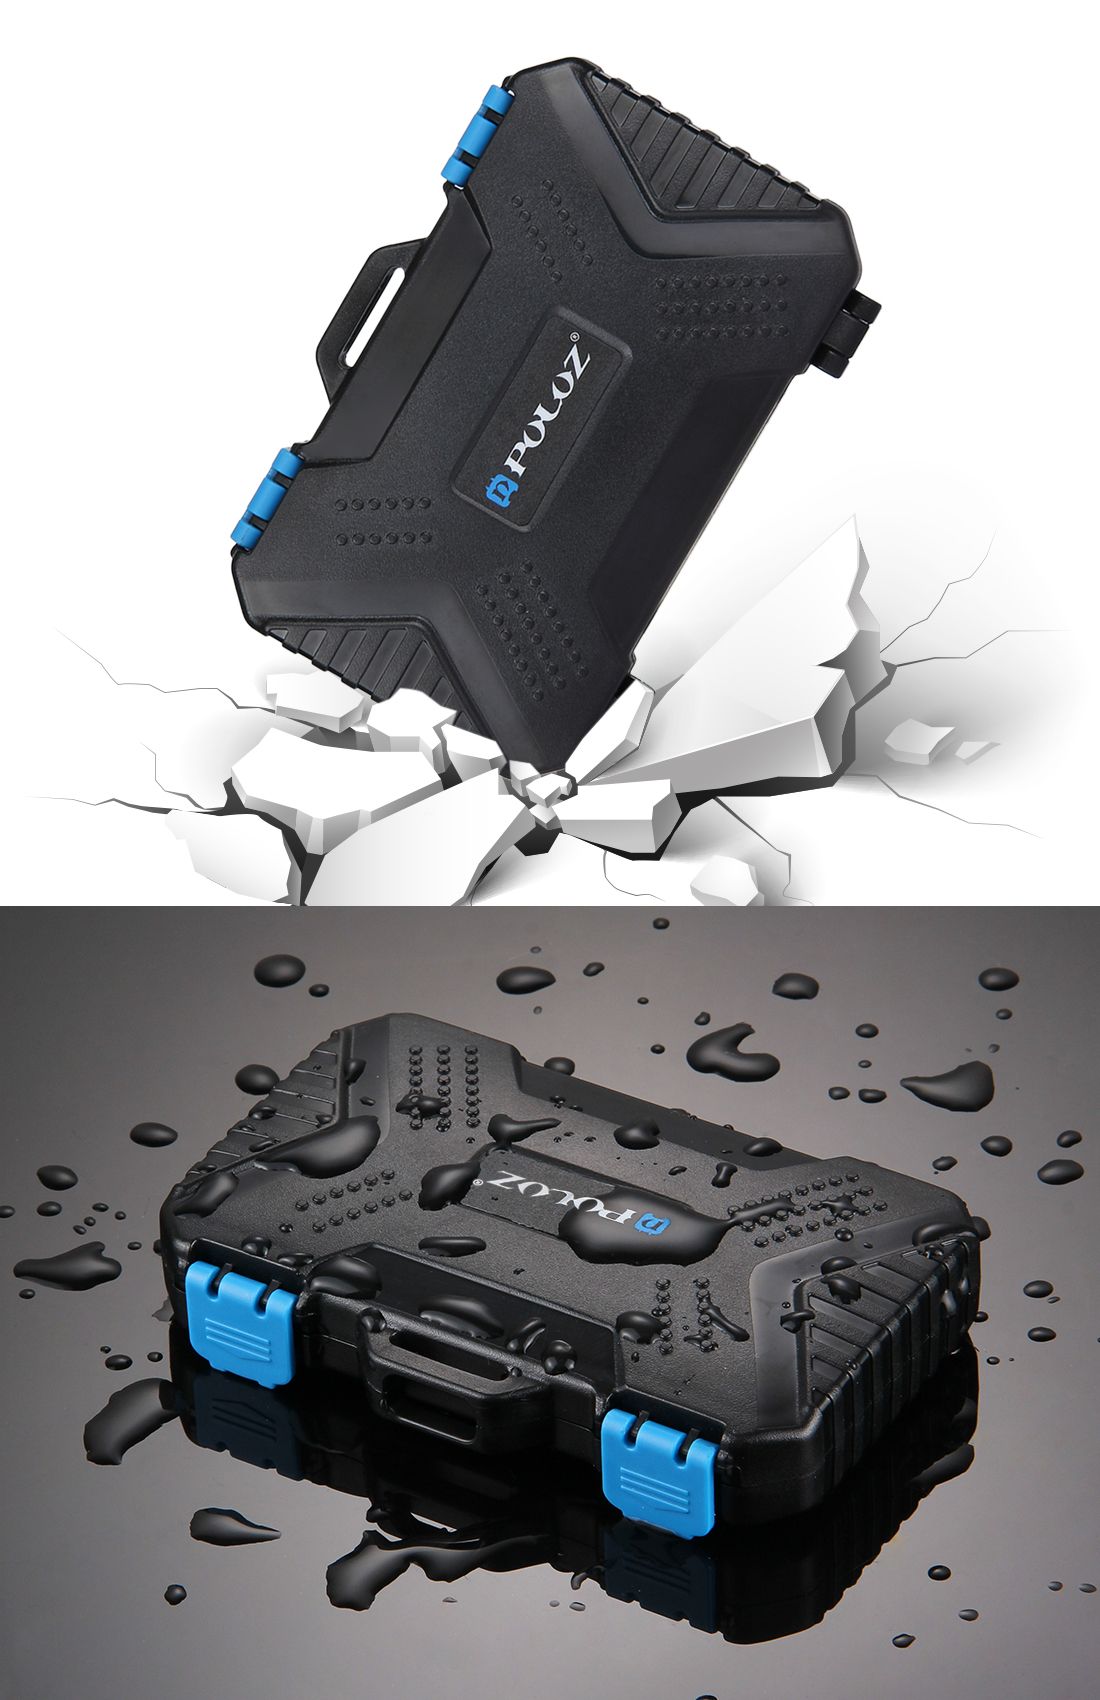 PULUZ-PU5002-27-in-1-Waterproof-Camera-Memory-Card-Case-for-CF-SD-TF-Card-PIN-SIM-Micro-SIM-Nano-SIM-1198851